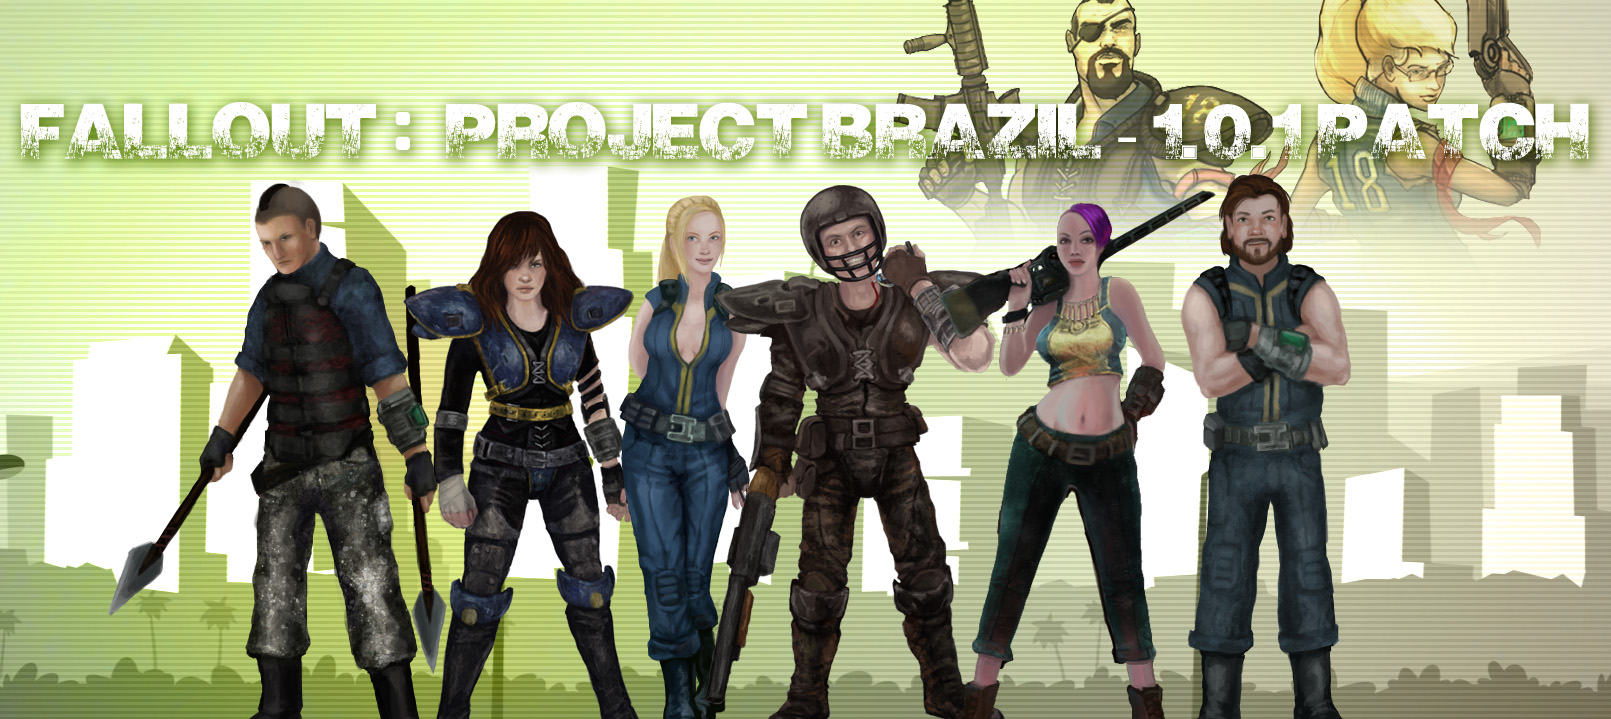 nexus mod manager fallout new vegas project brazil